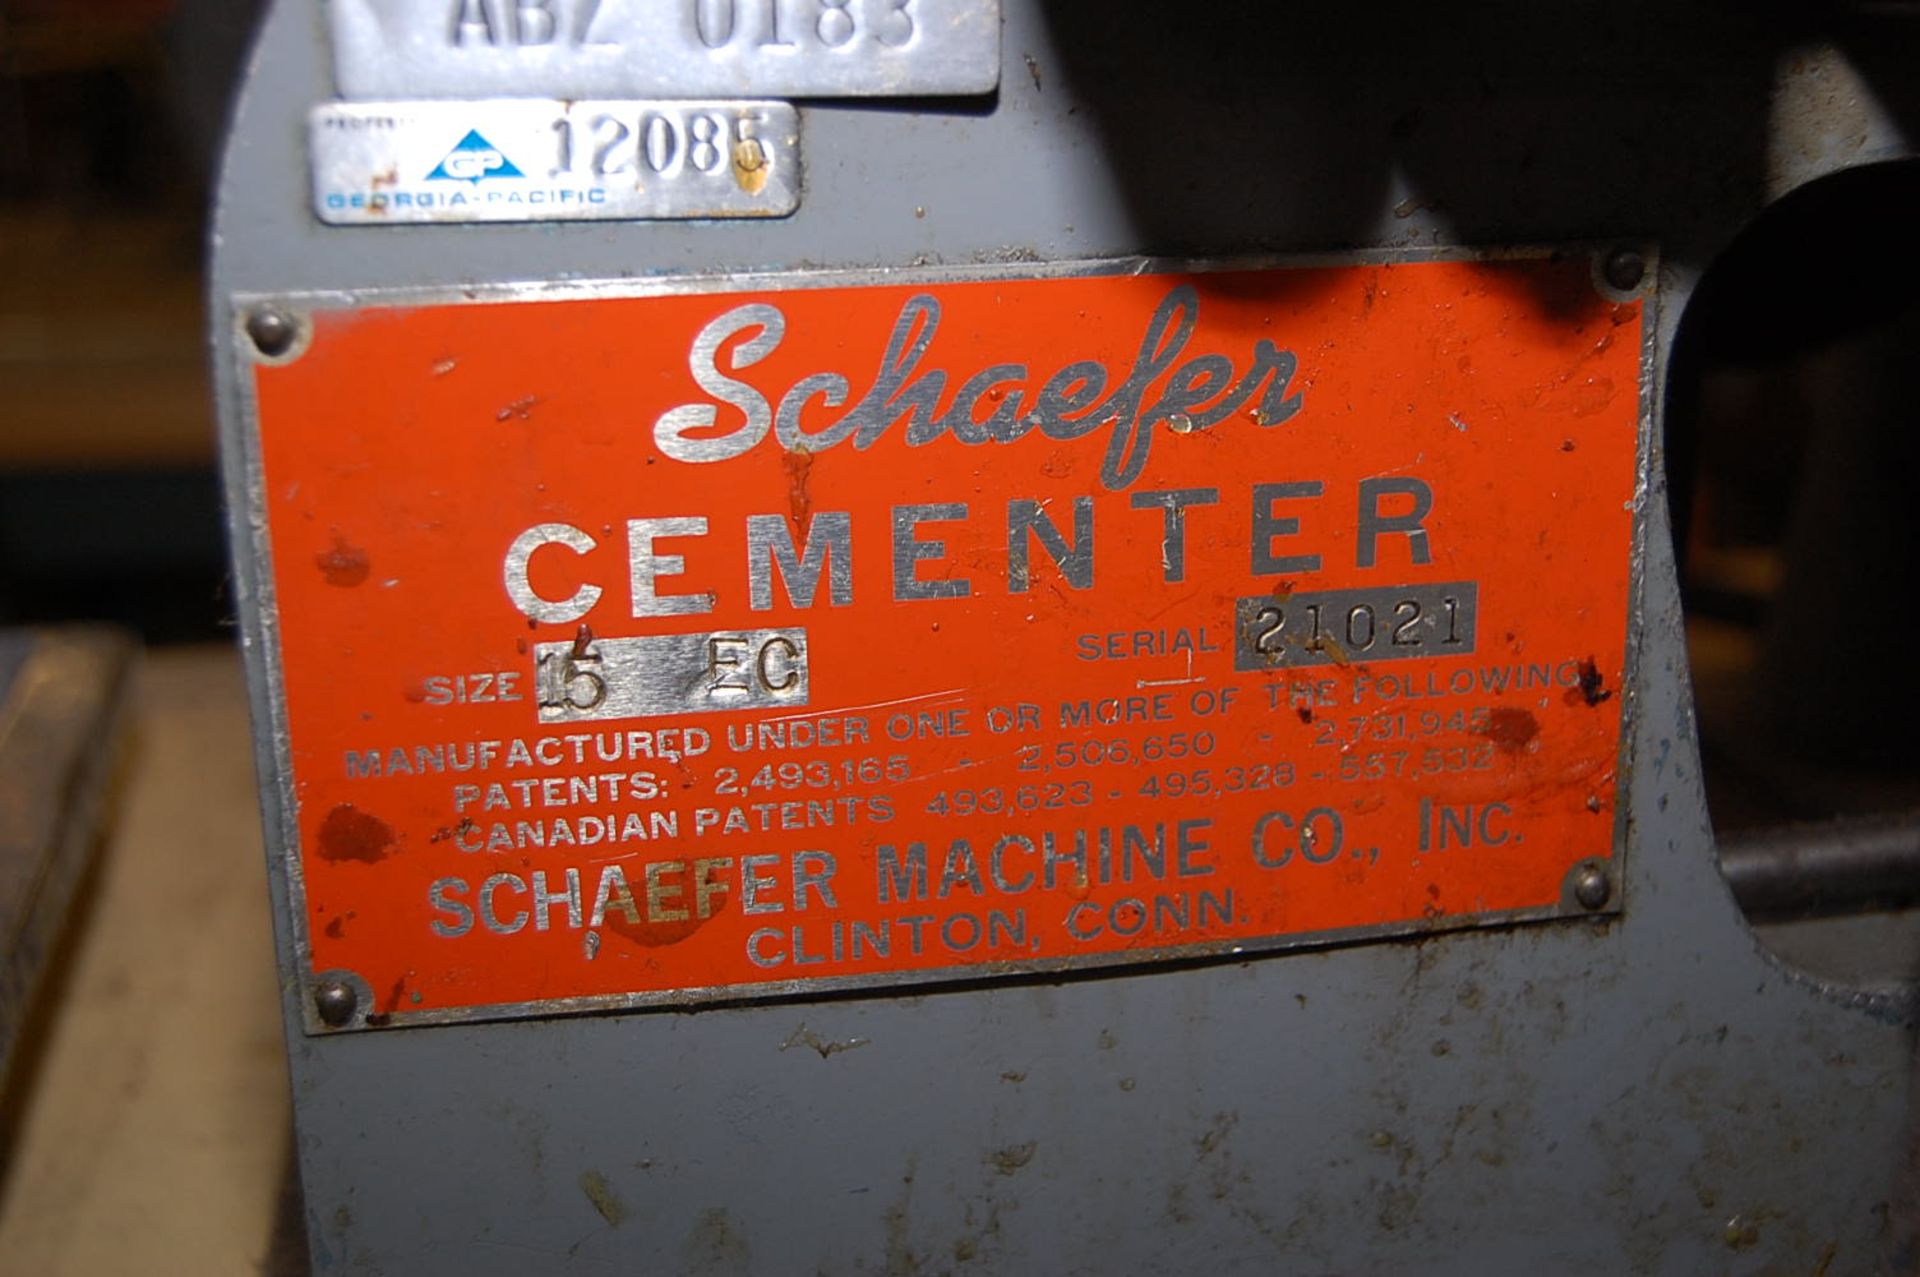 Schaefer Cementer, Size 15 EC/15 in. Roll, SN 21021 - Image 2 of 2